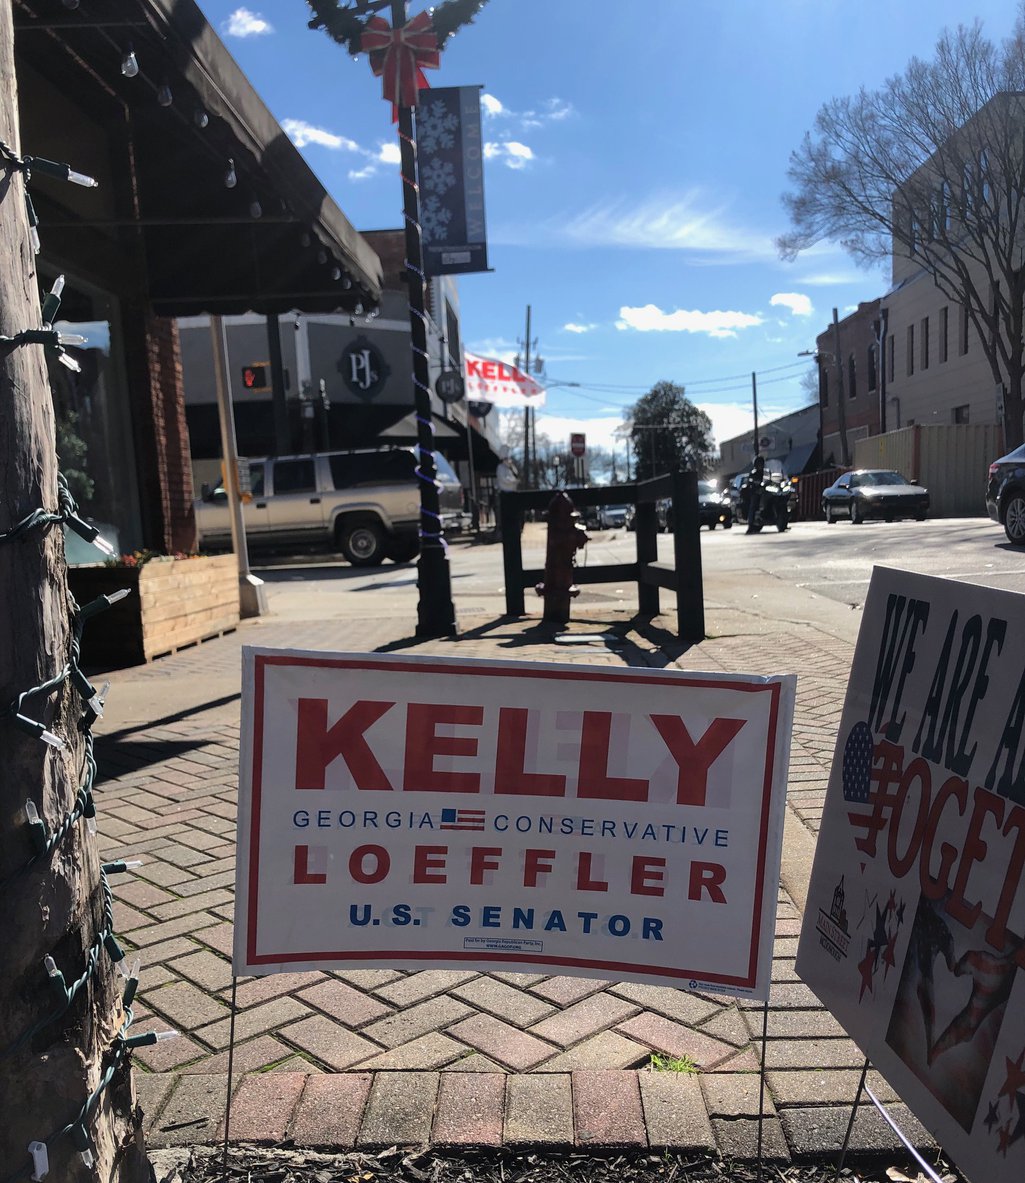 Sign for Kelly Loeffler in Georgia Senate election, 3 January 2021